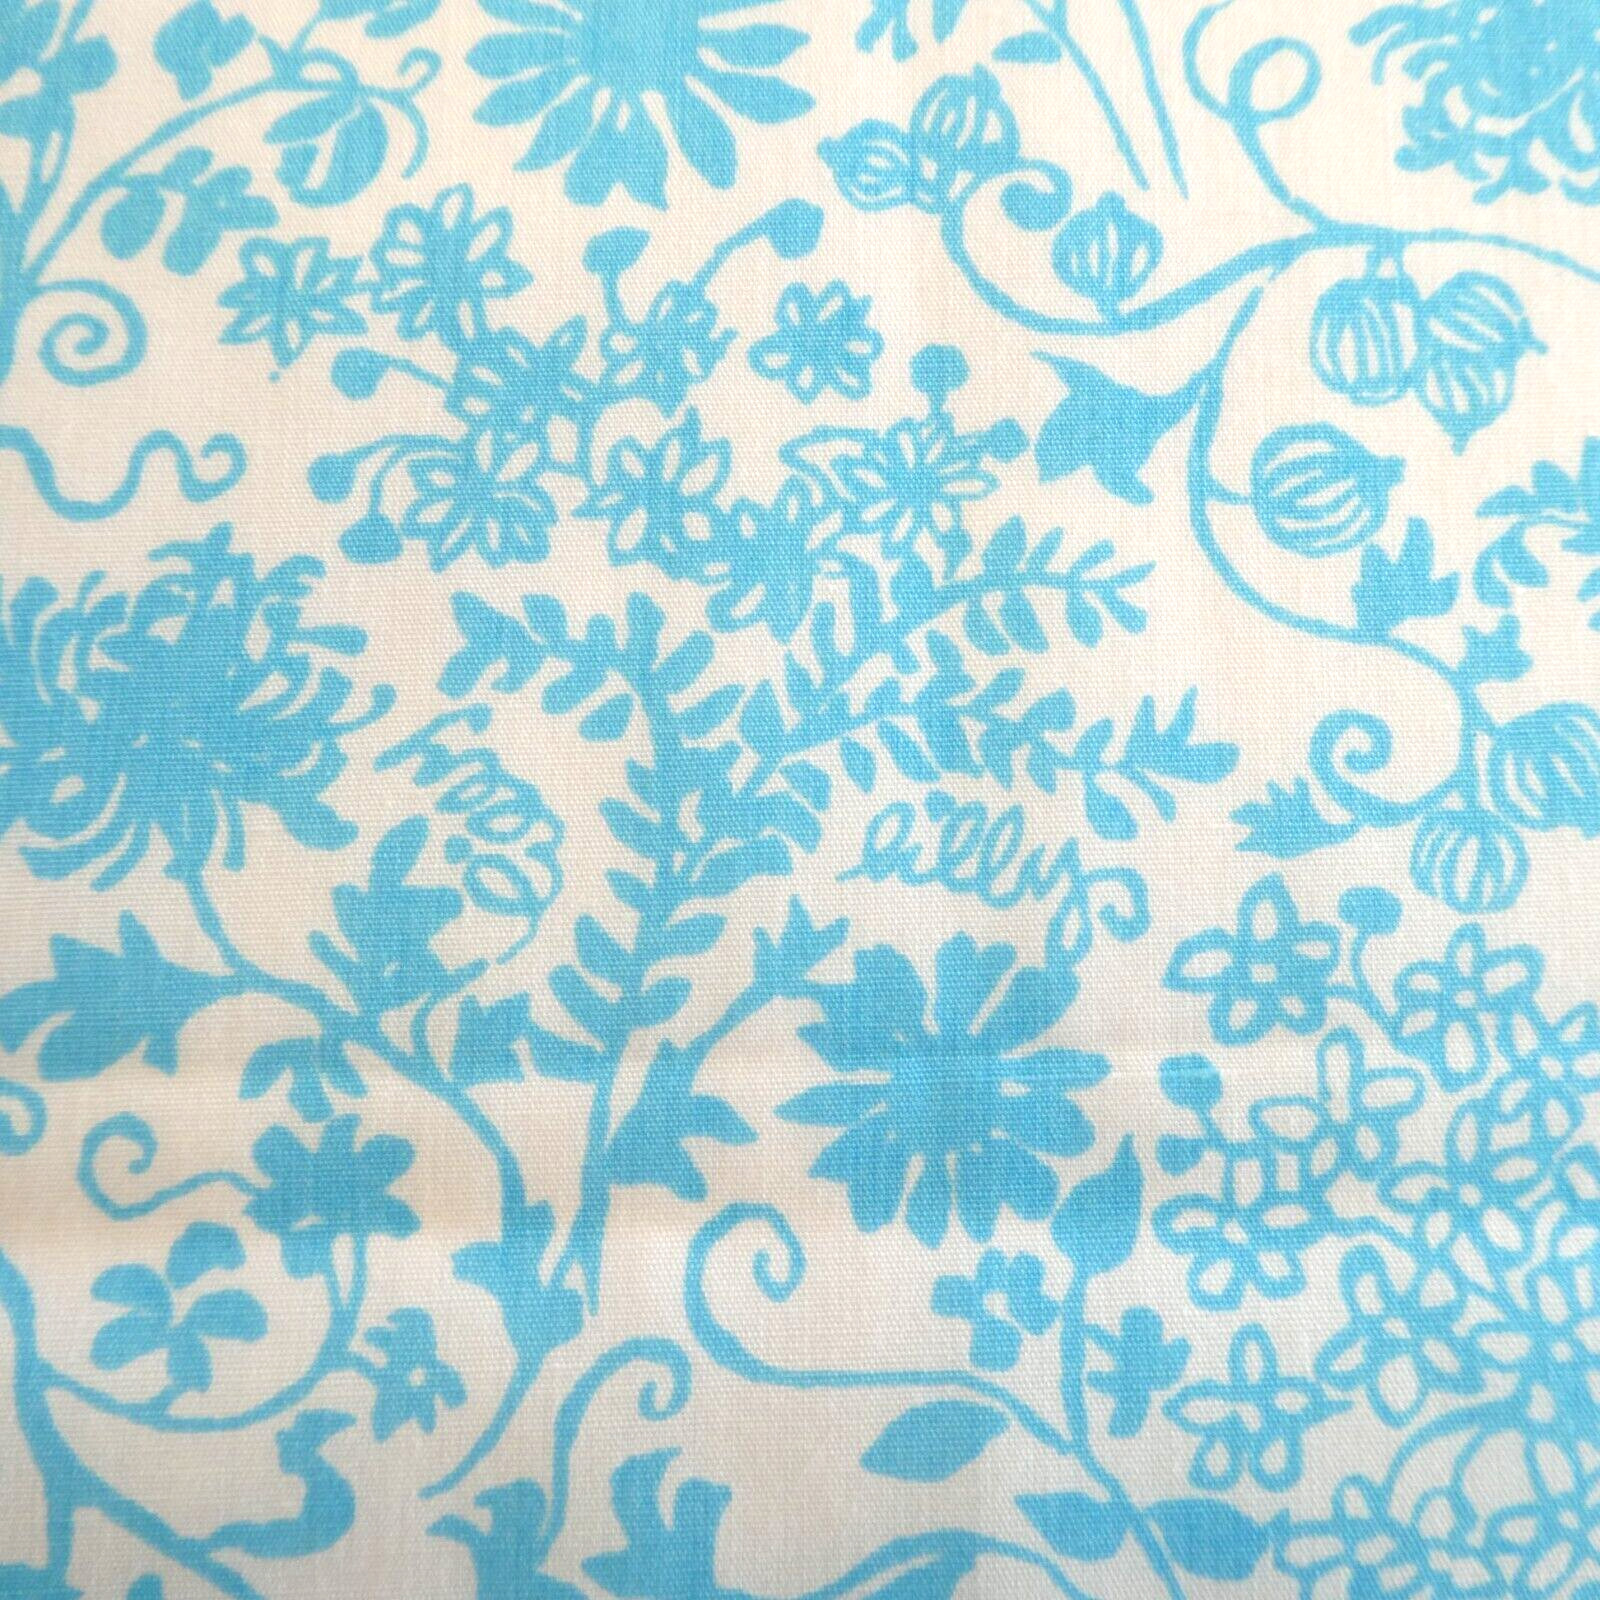 Lilly Pulitzer Ana Delia by Zuzek Key West Hand Printed Fabric 1 yard Blue VTG